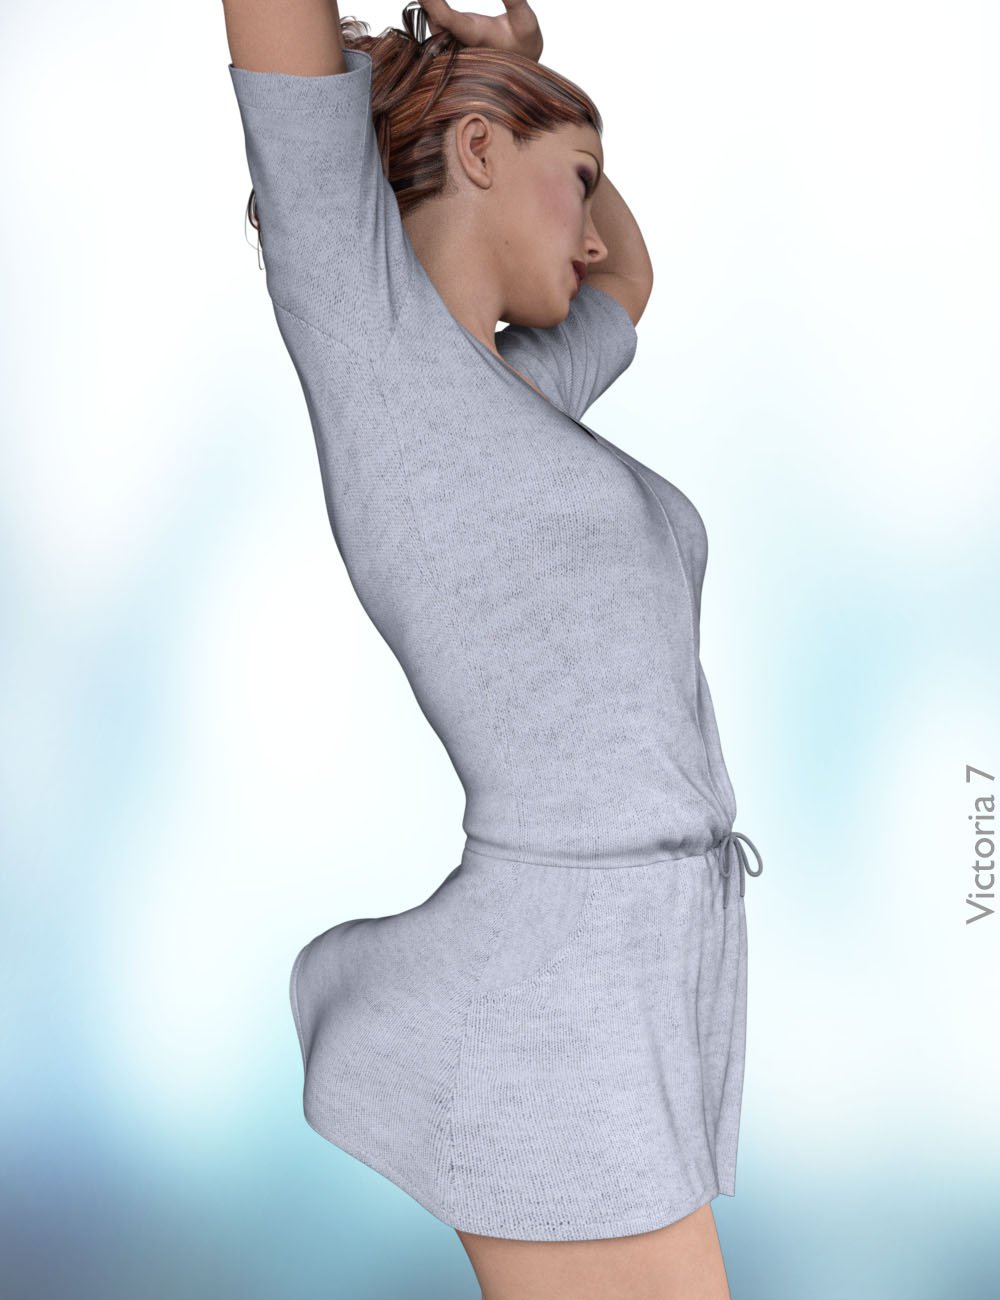 Loose Sweater Dress for Genesis 3 Female(s) by: aurorabreeze, 3D Models by Daz 3D